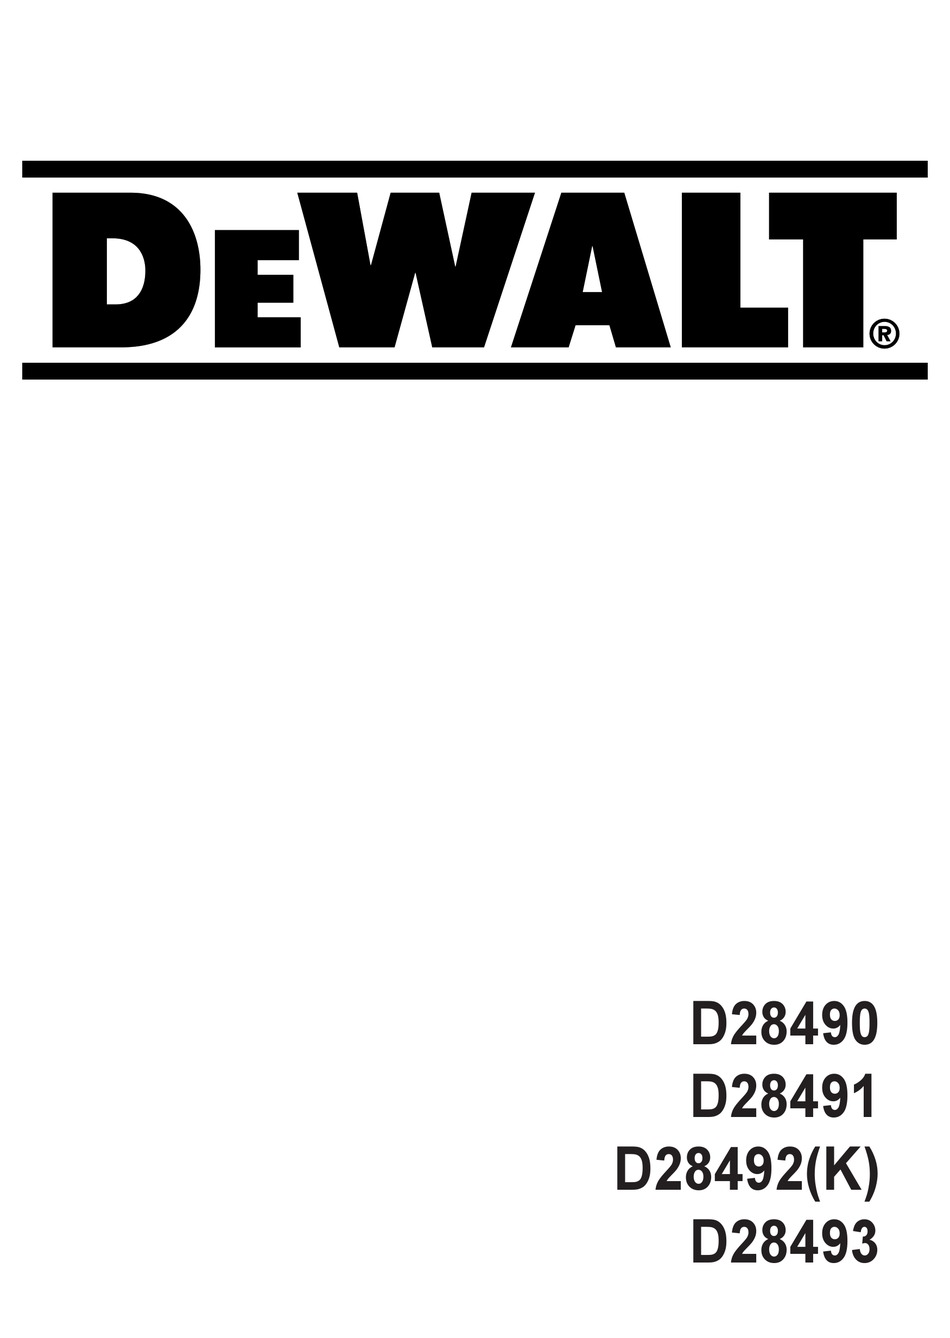 DEWALT D28490 HANDLING INSTRUCTIONS MANUAL Download | ManualsLib